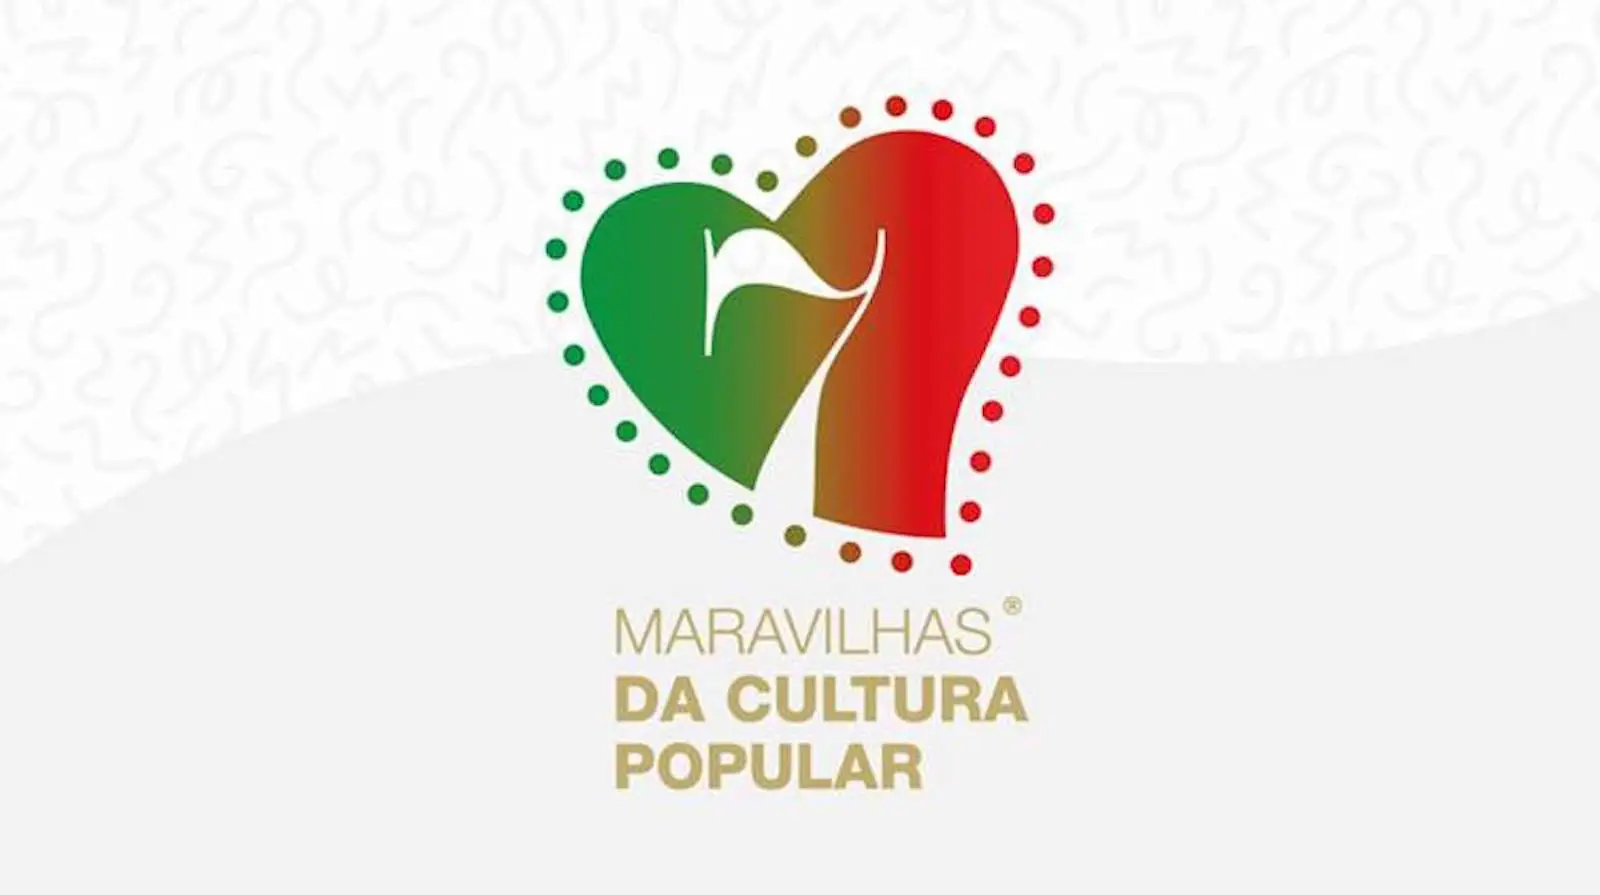 7-Maravilhas-Da-Cultura-Popular-1